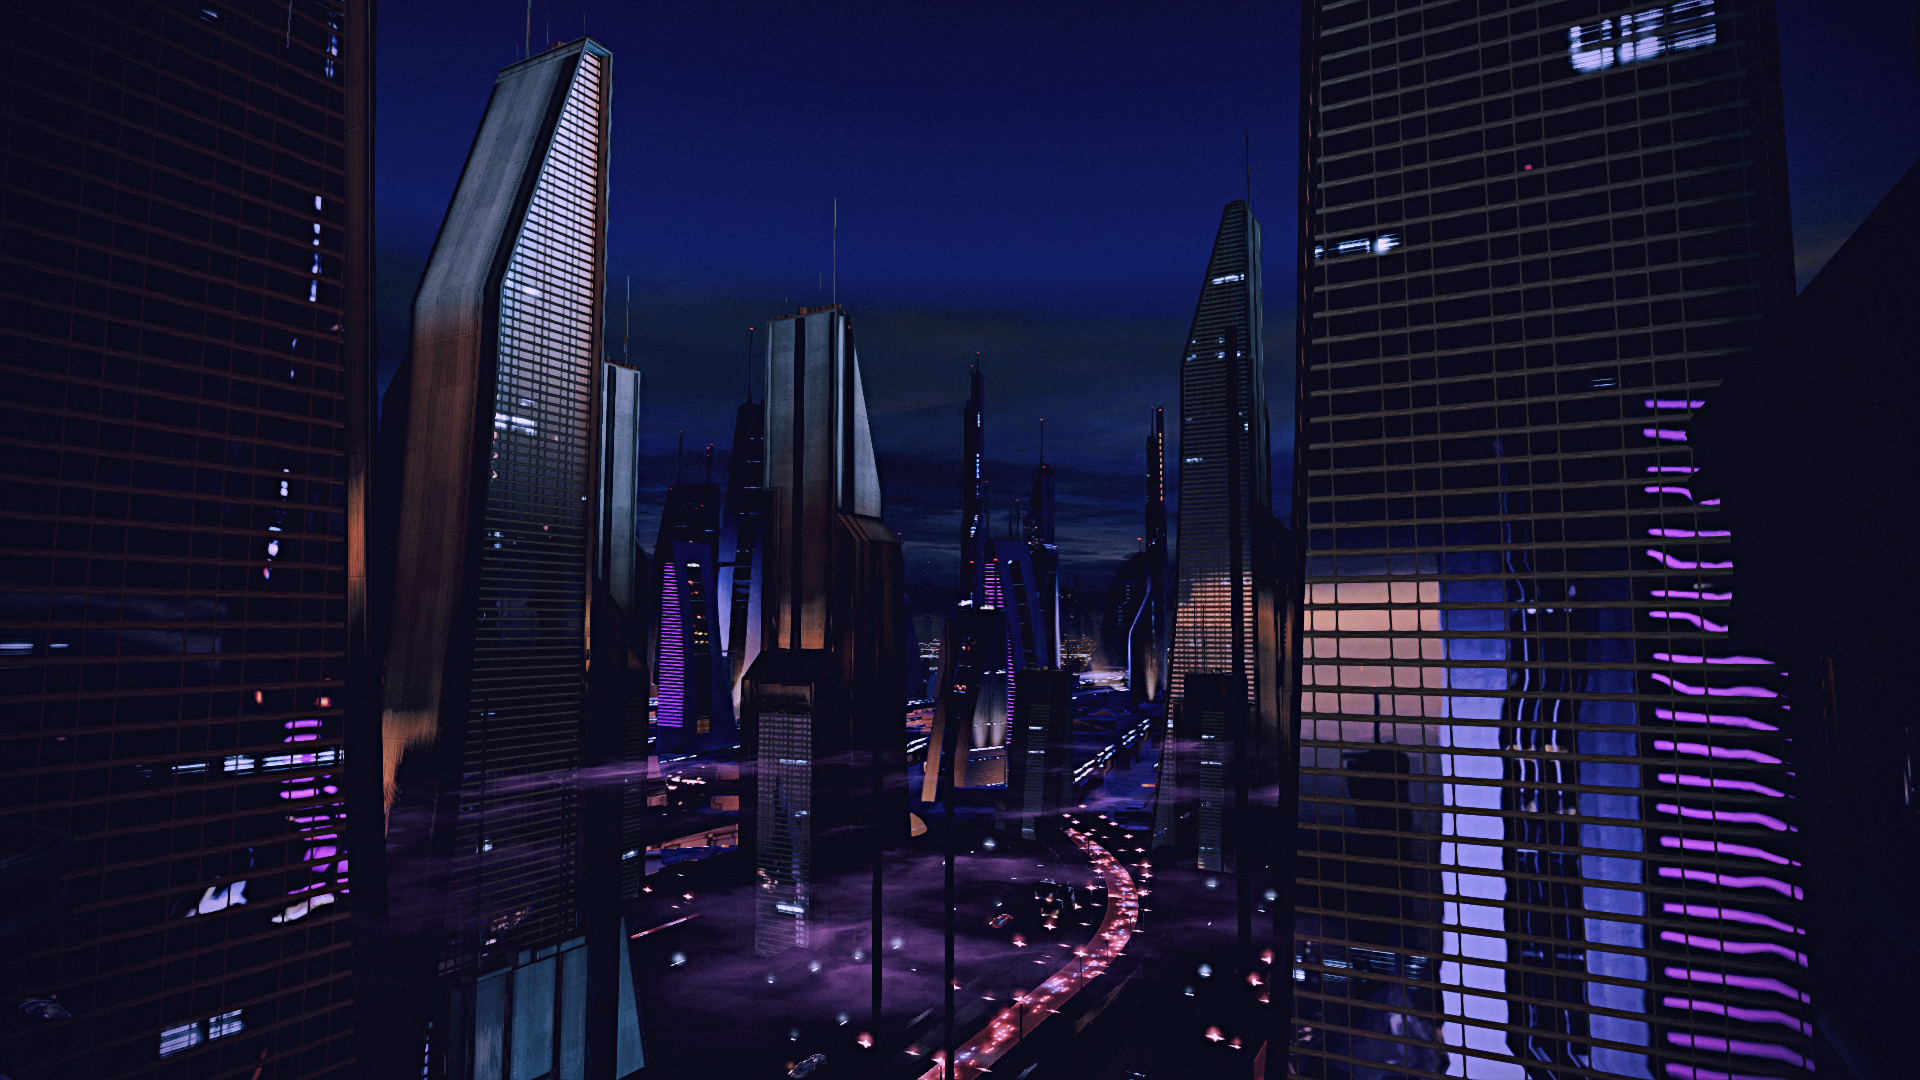 General 1920x1080 video games Mass Effect 2 Mass Effect: Legendary Edition science fiction futuristic city building lights night dark blue purple